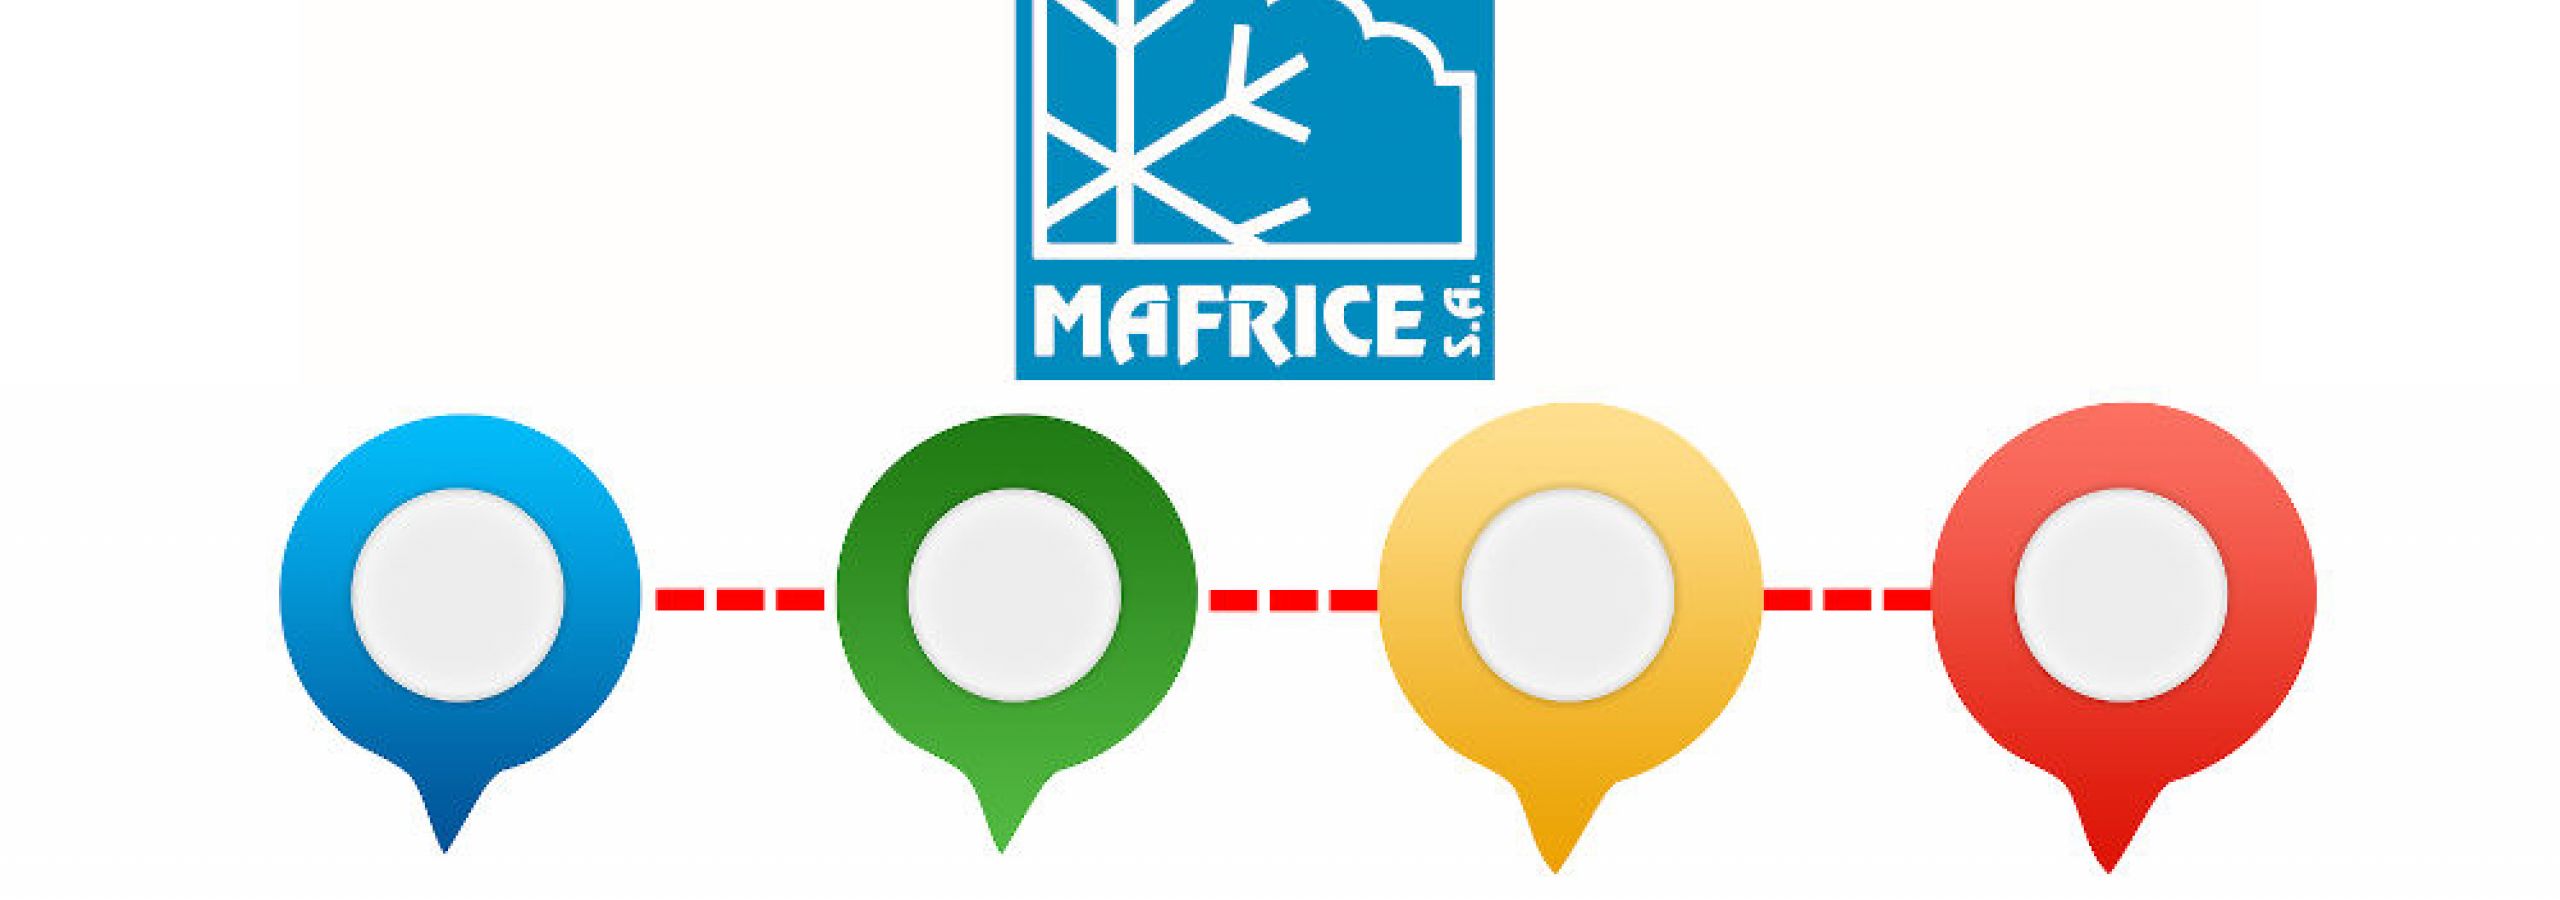 Servicio Integral de Mafrice